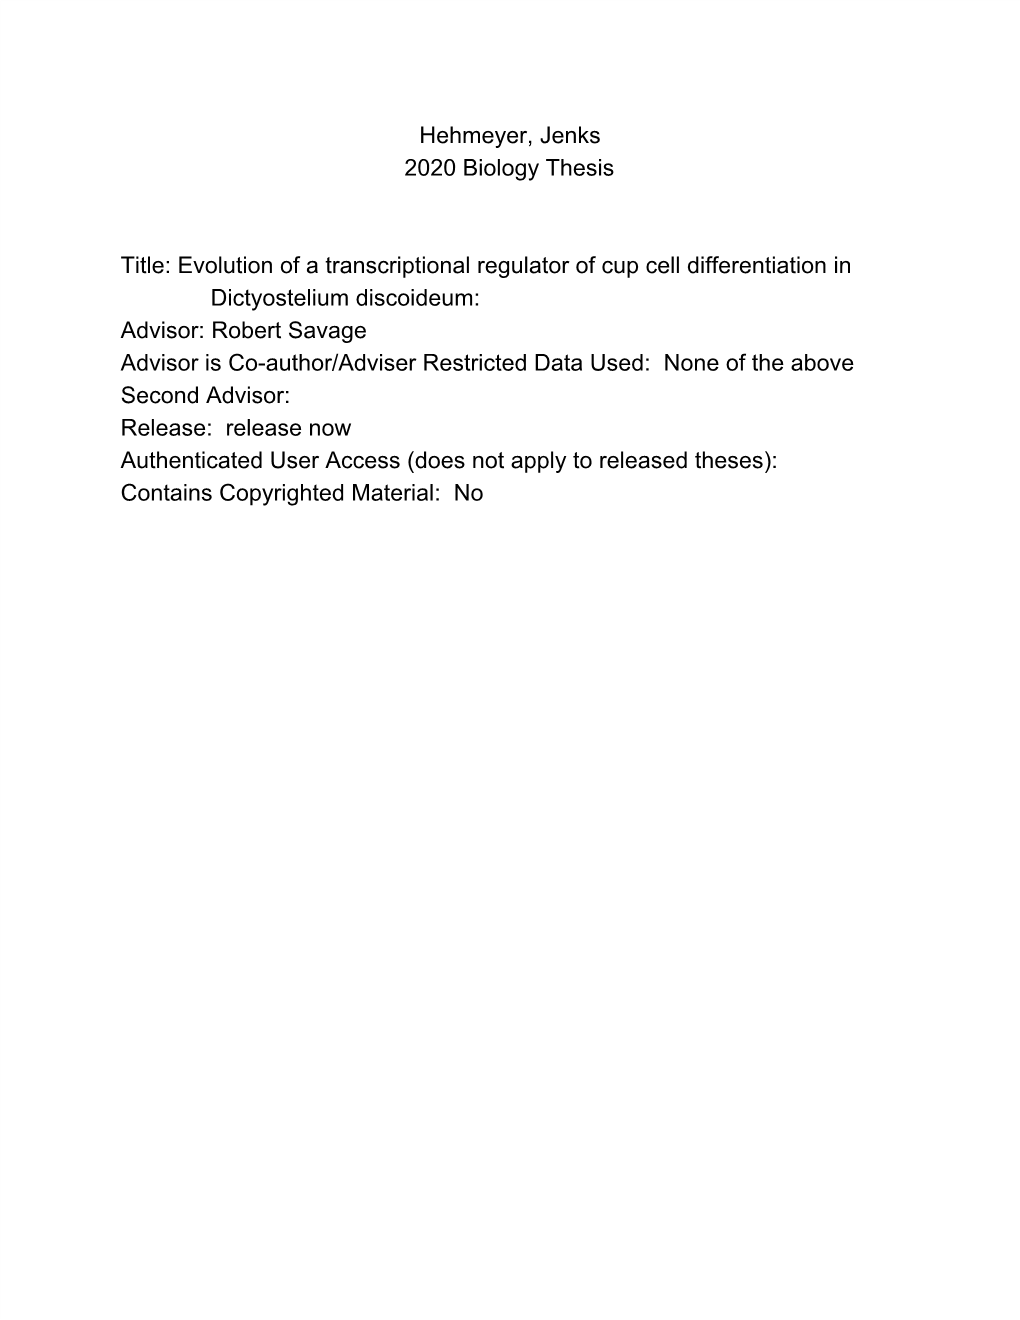 Hehmeyer, Jenks 2020 Biology Thesis Title